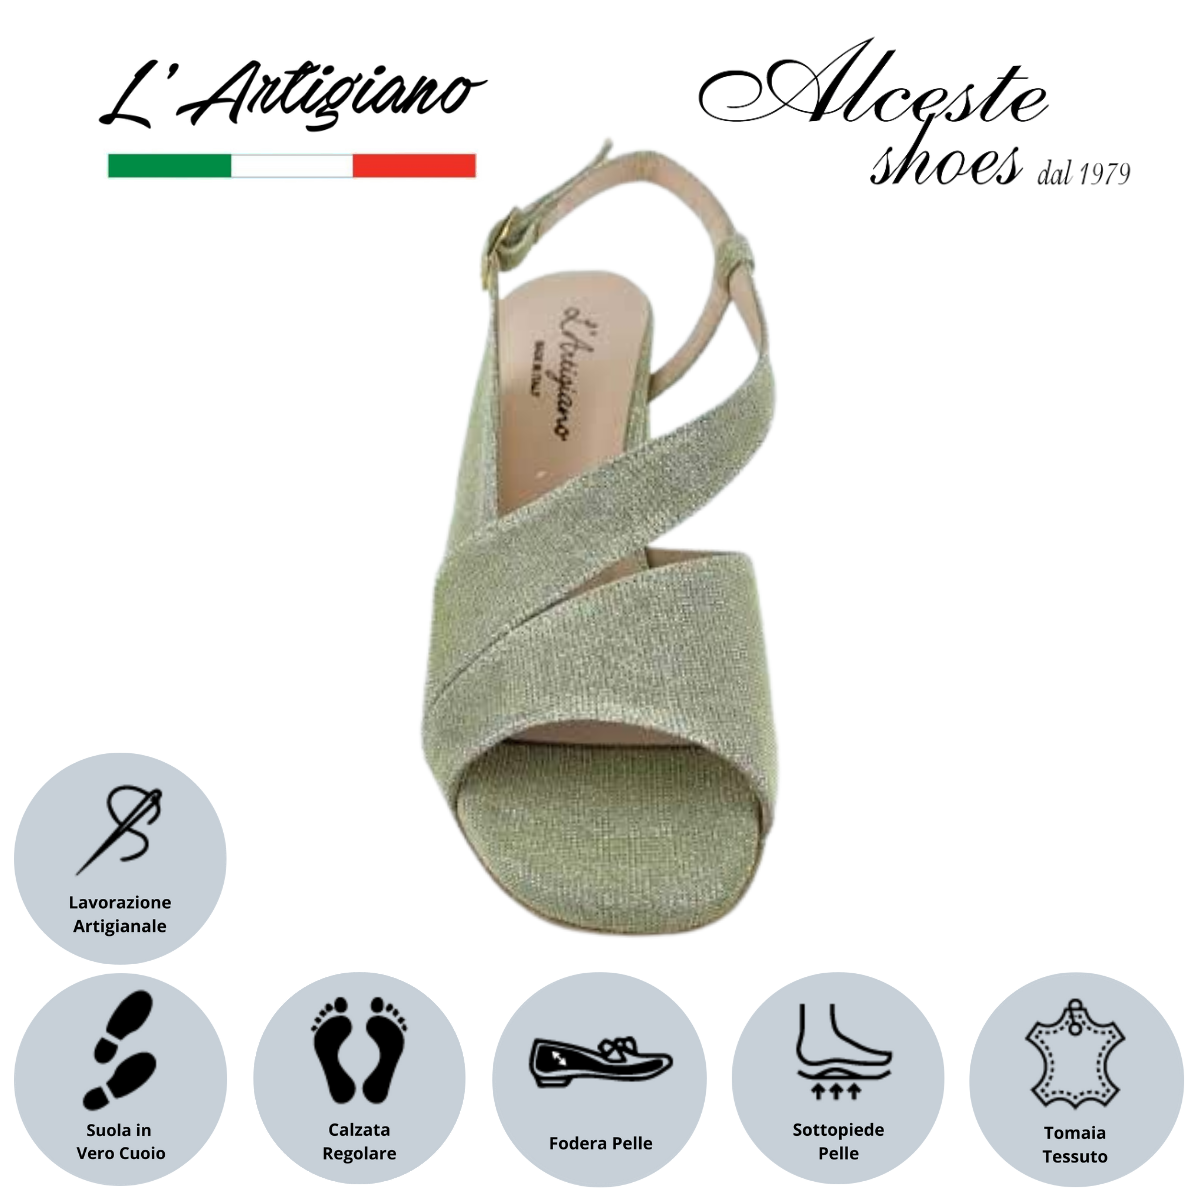 Sandalo Donna "L'Artigiano" Art. 122 Tessuto Lurex Platino Alceste Shoes 8 1